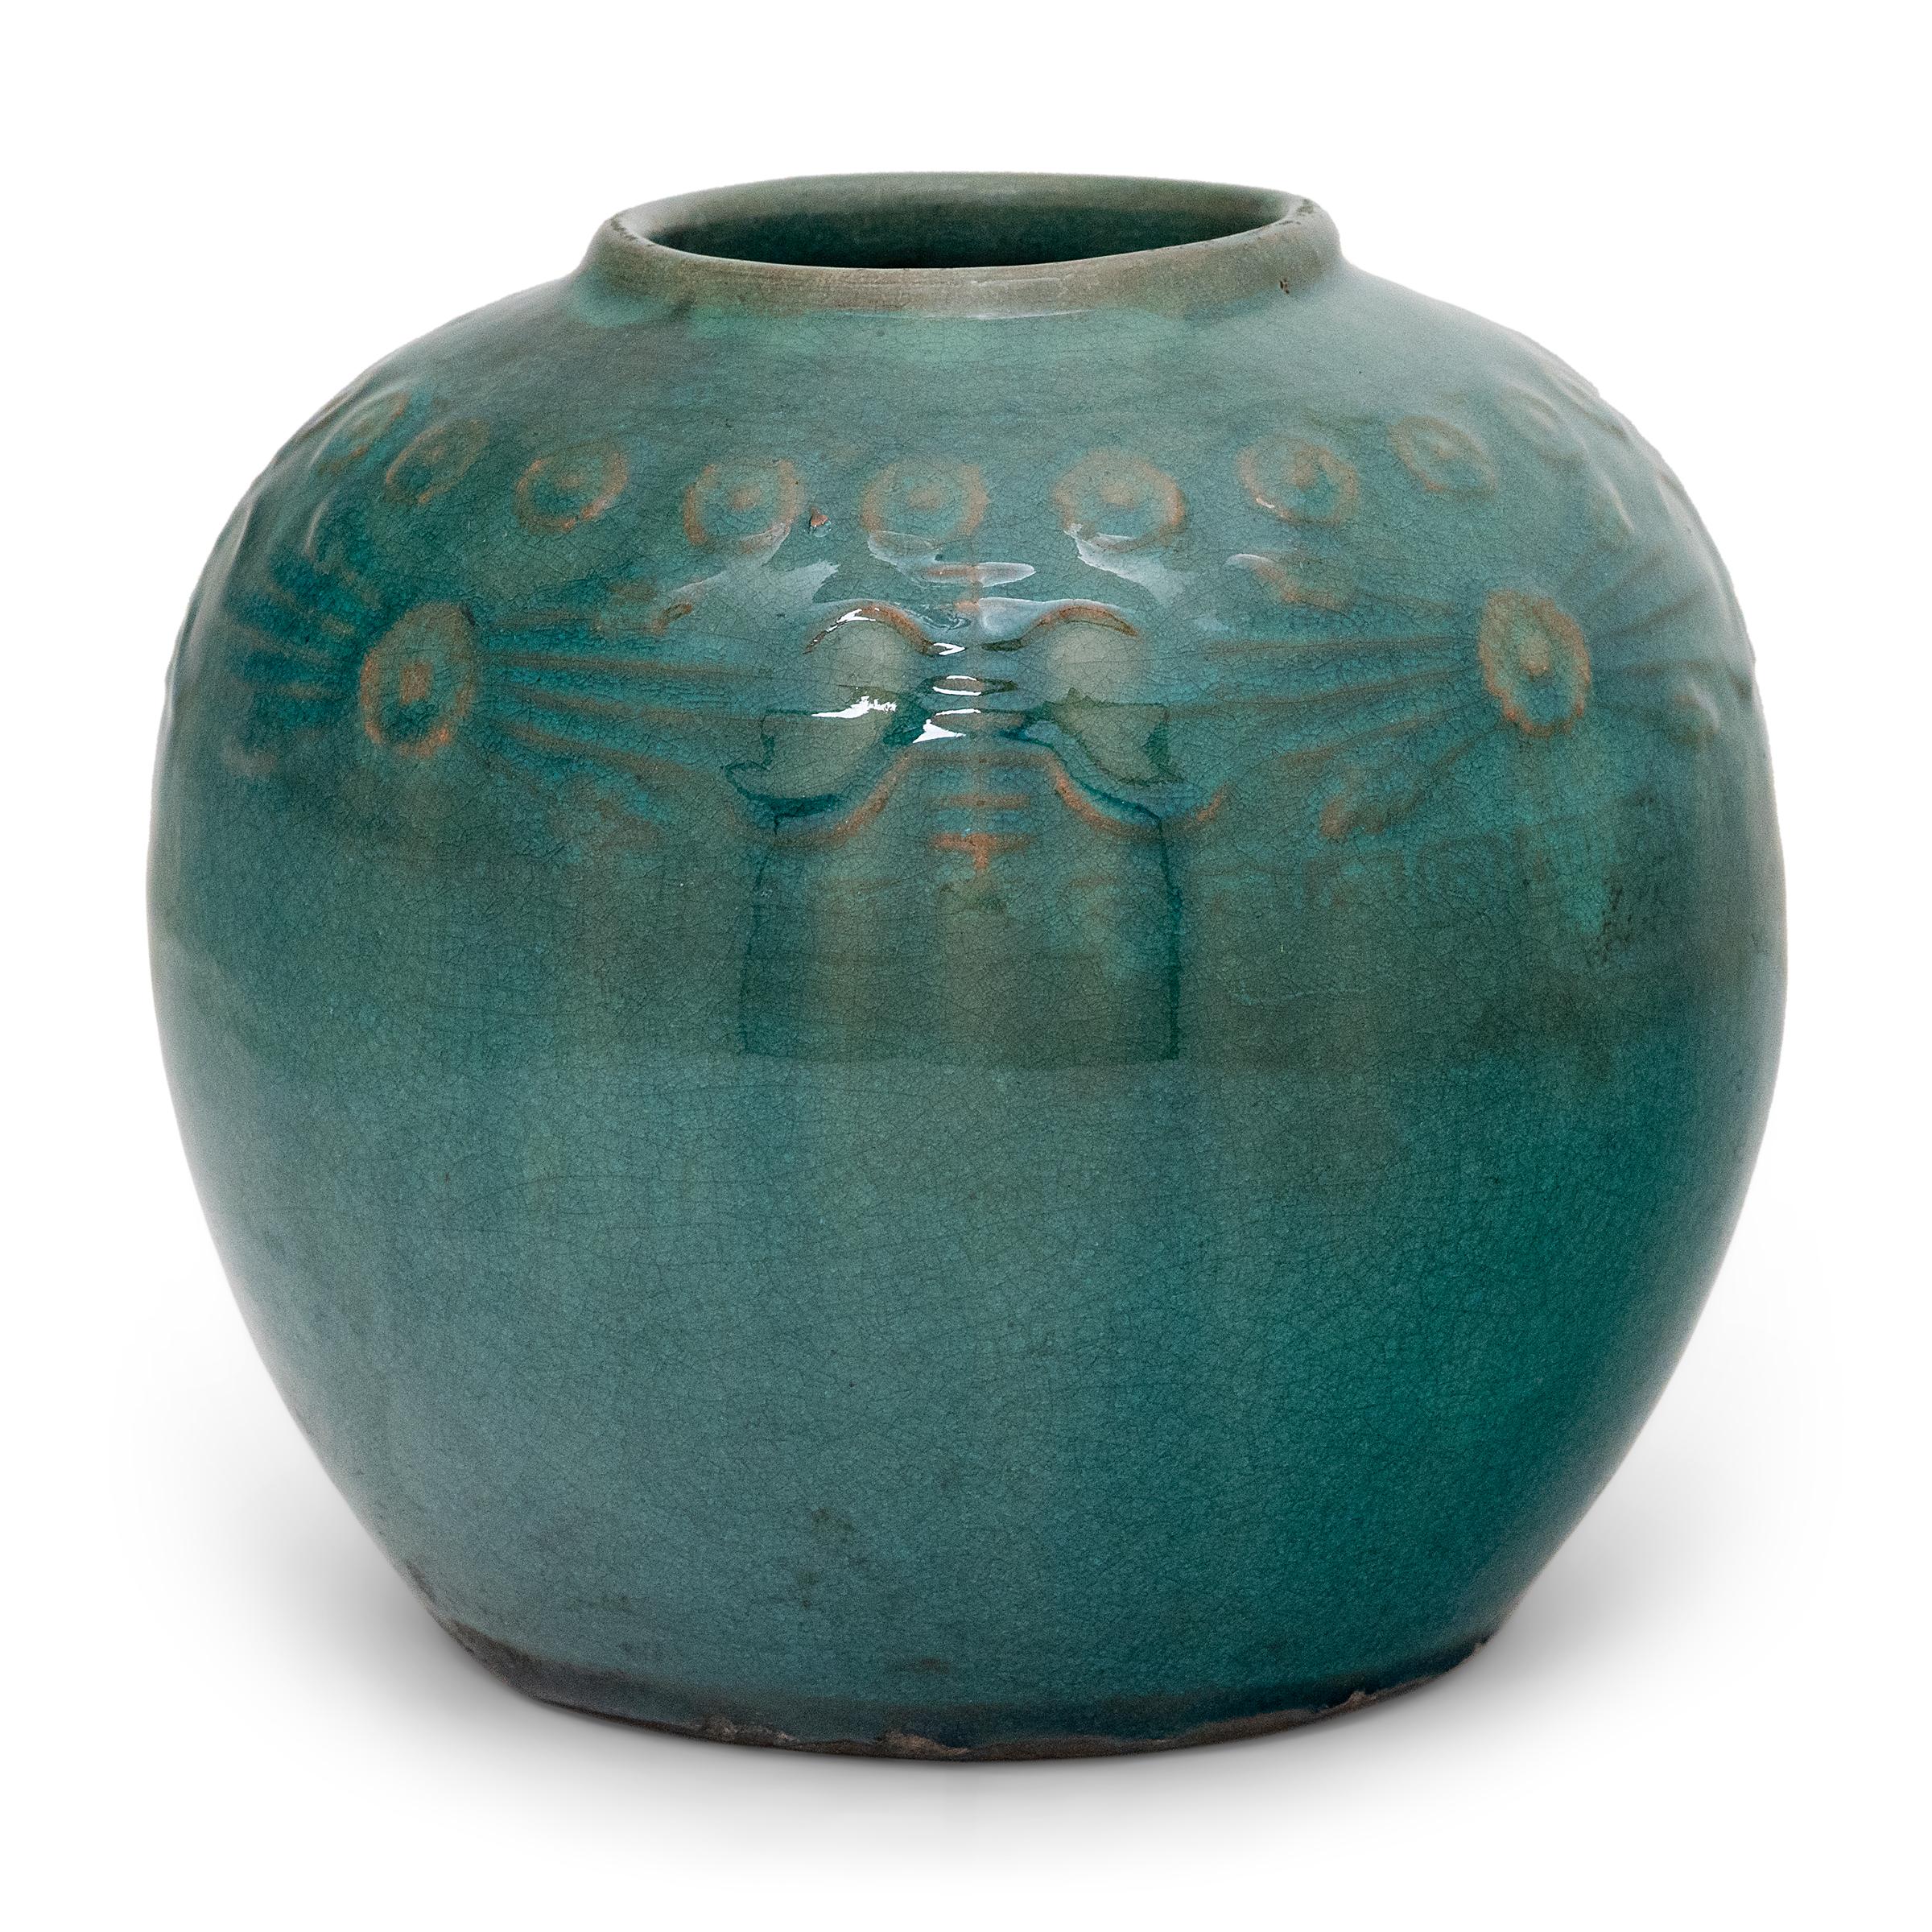 Primitive Chinese Jade Green Salt Jar, c. 1900